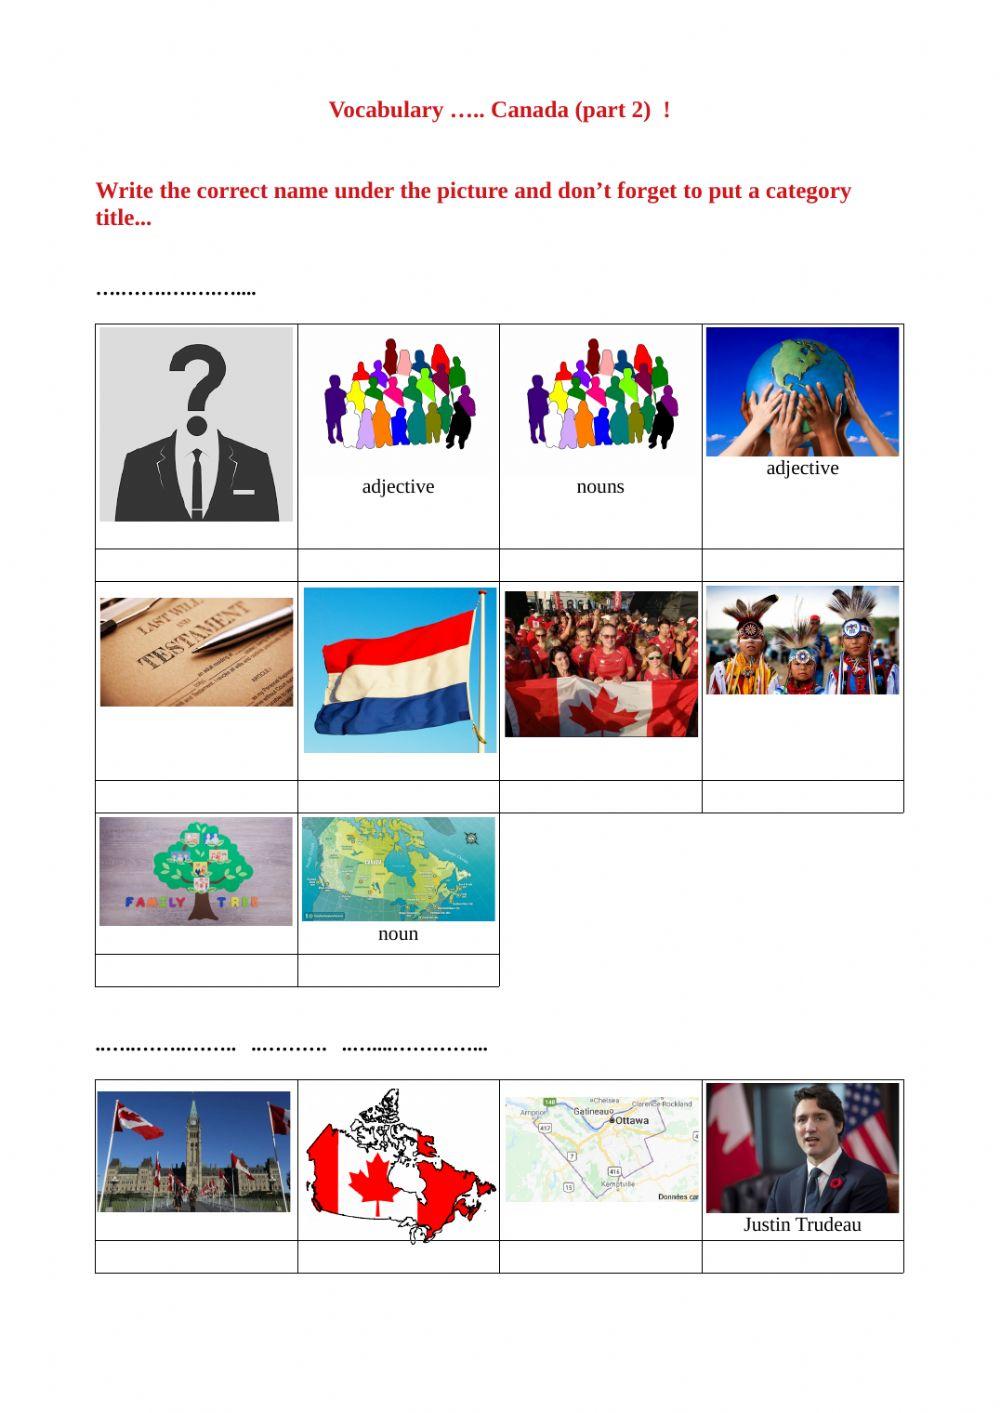 Vocabulary test - Canada part 2